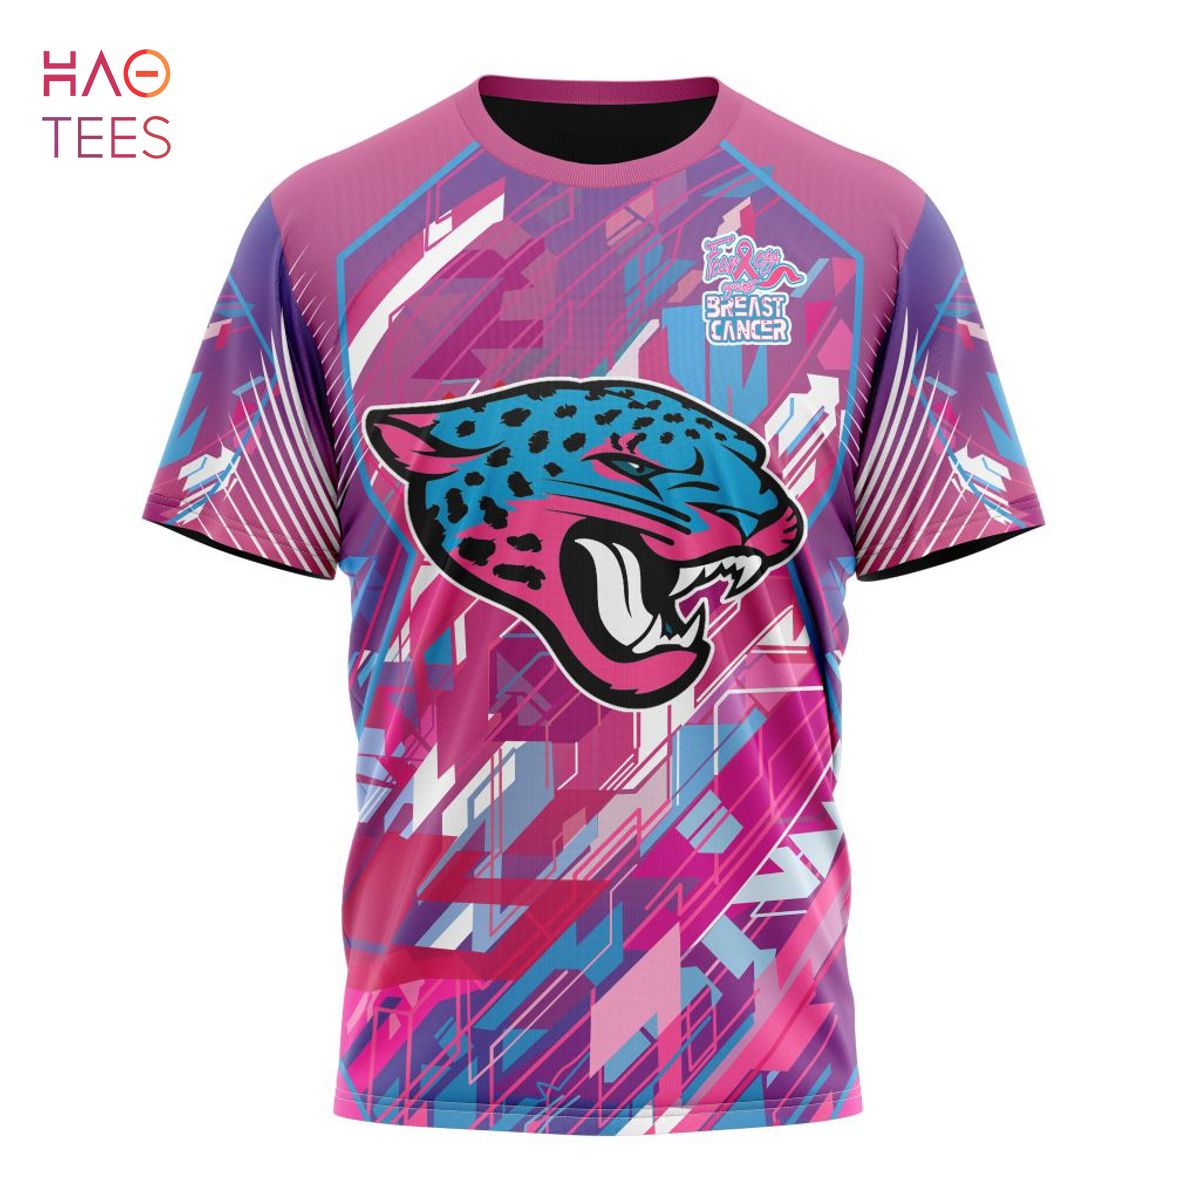 BEST NFL Jacksonville Jaguars, Specialized Design I Pink I Can! Fearless Again Breast Cancer 3D Hoodie